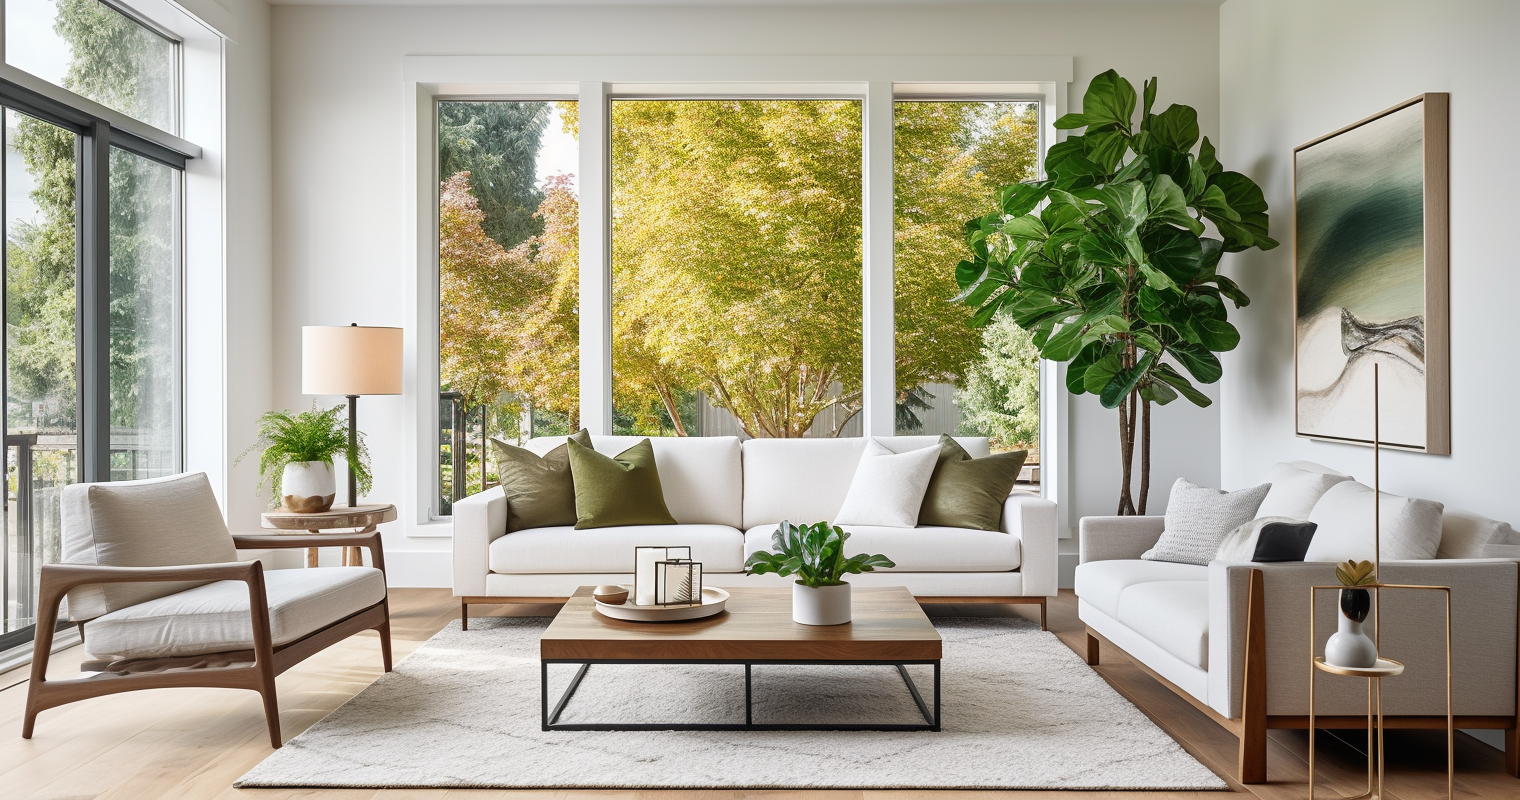 Pristine Modern Living Room with Houseplants